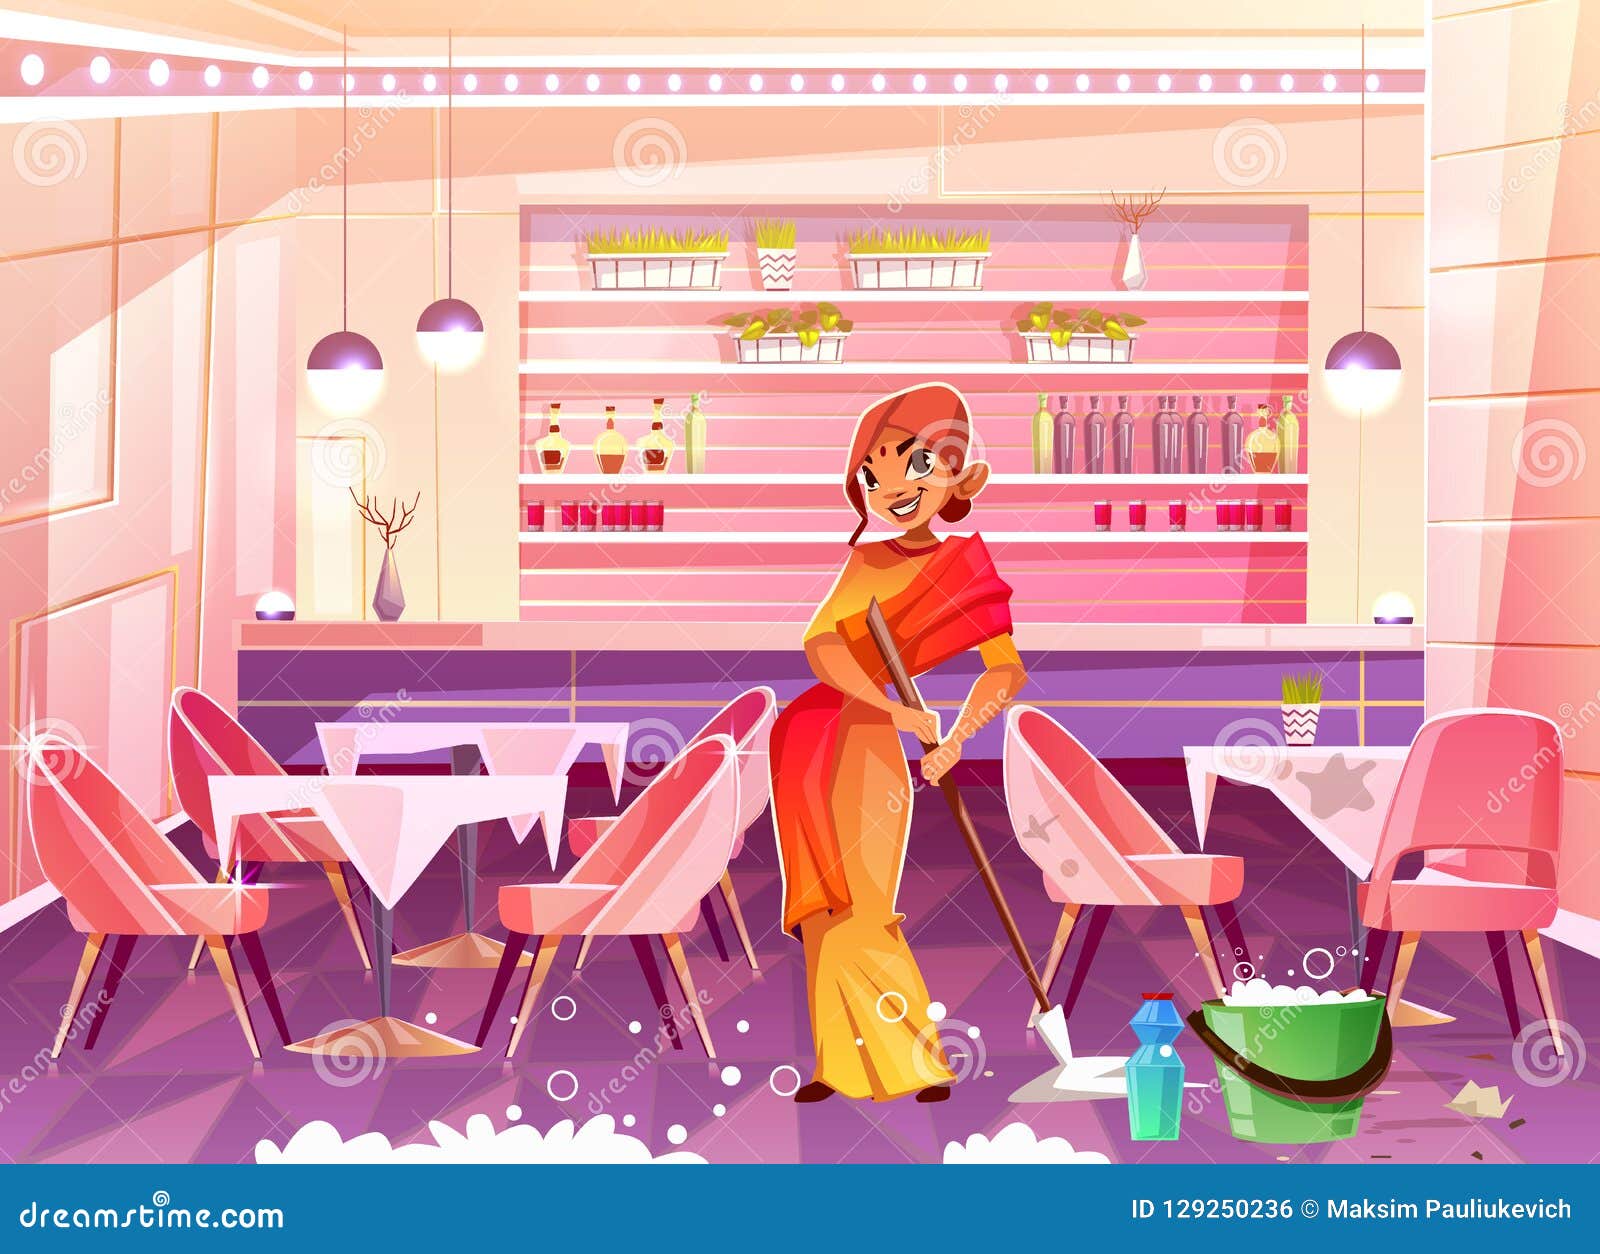 Indian Restaurant Interior Stock Illustrations 22 Indian